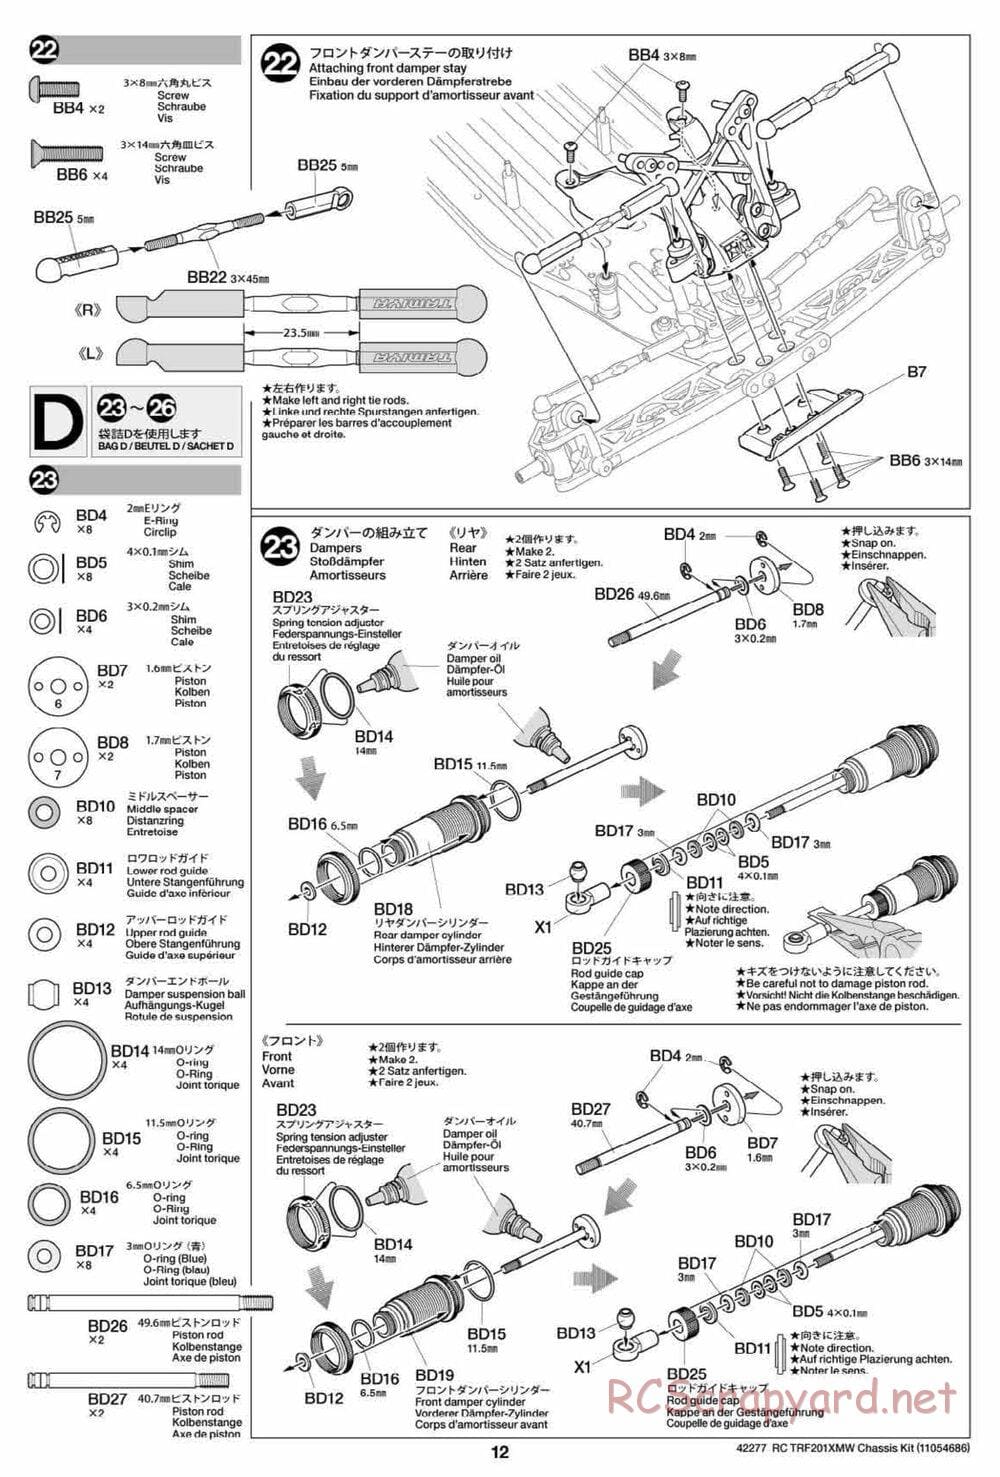 Tamiya - TRF201XMW Chassis - Manual - Page 12